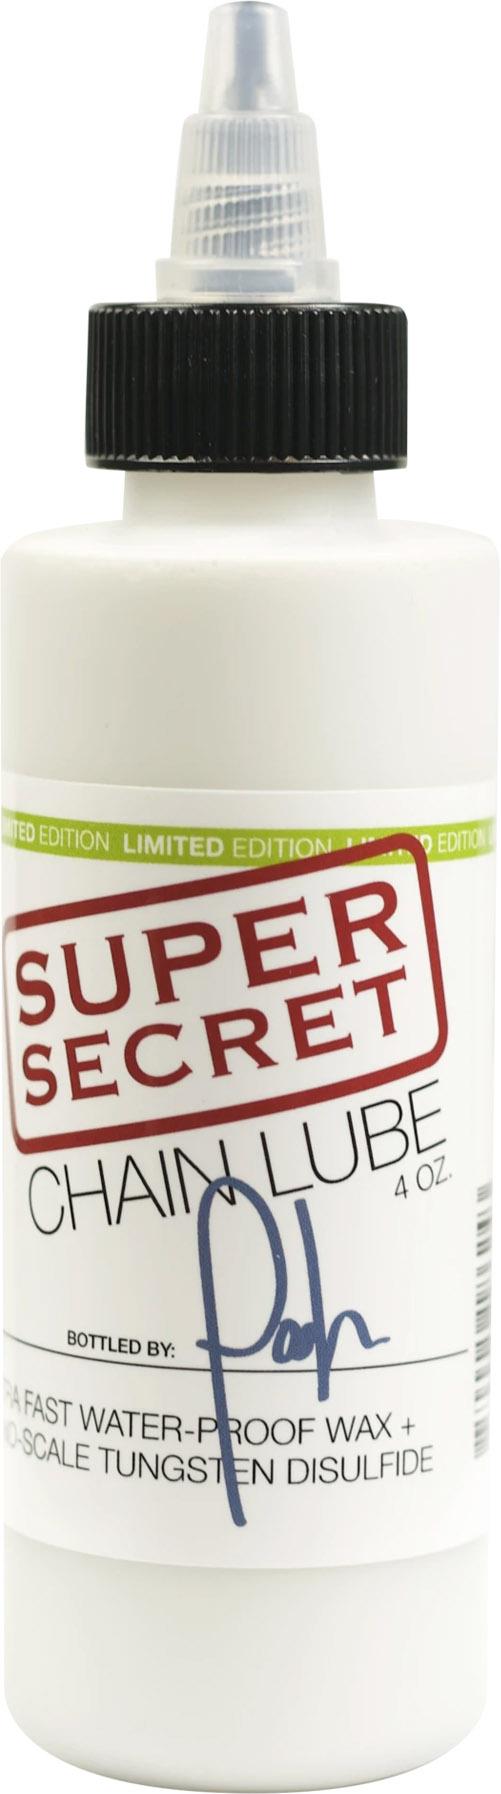 Silca Super Secret Chain Lube Bottle (4oz)  Neutral